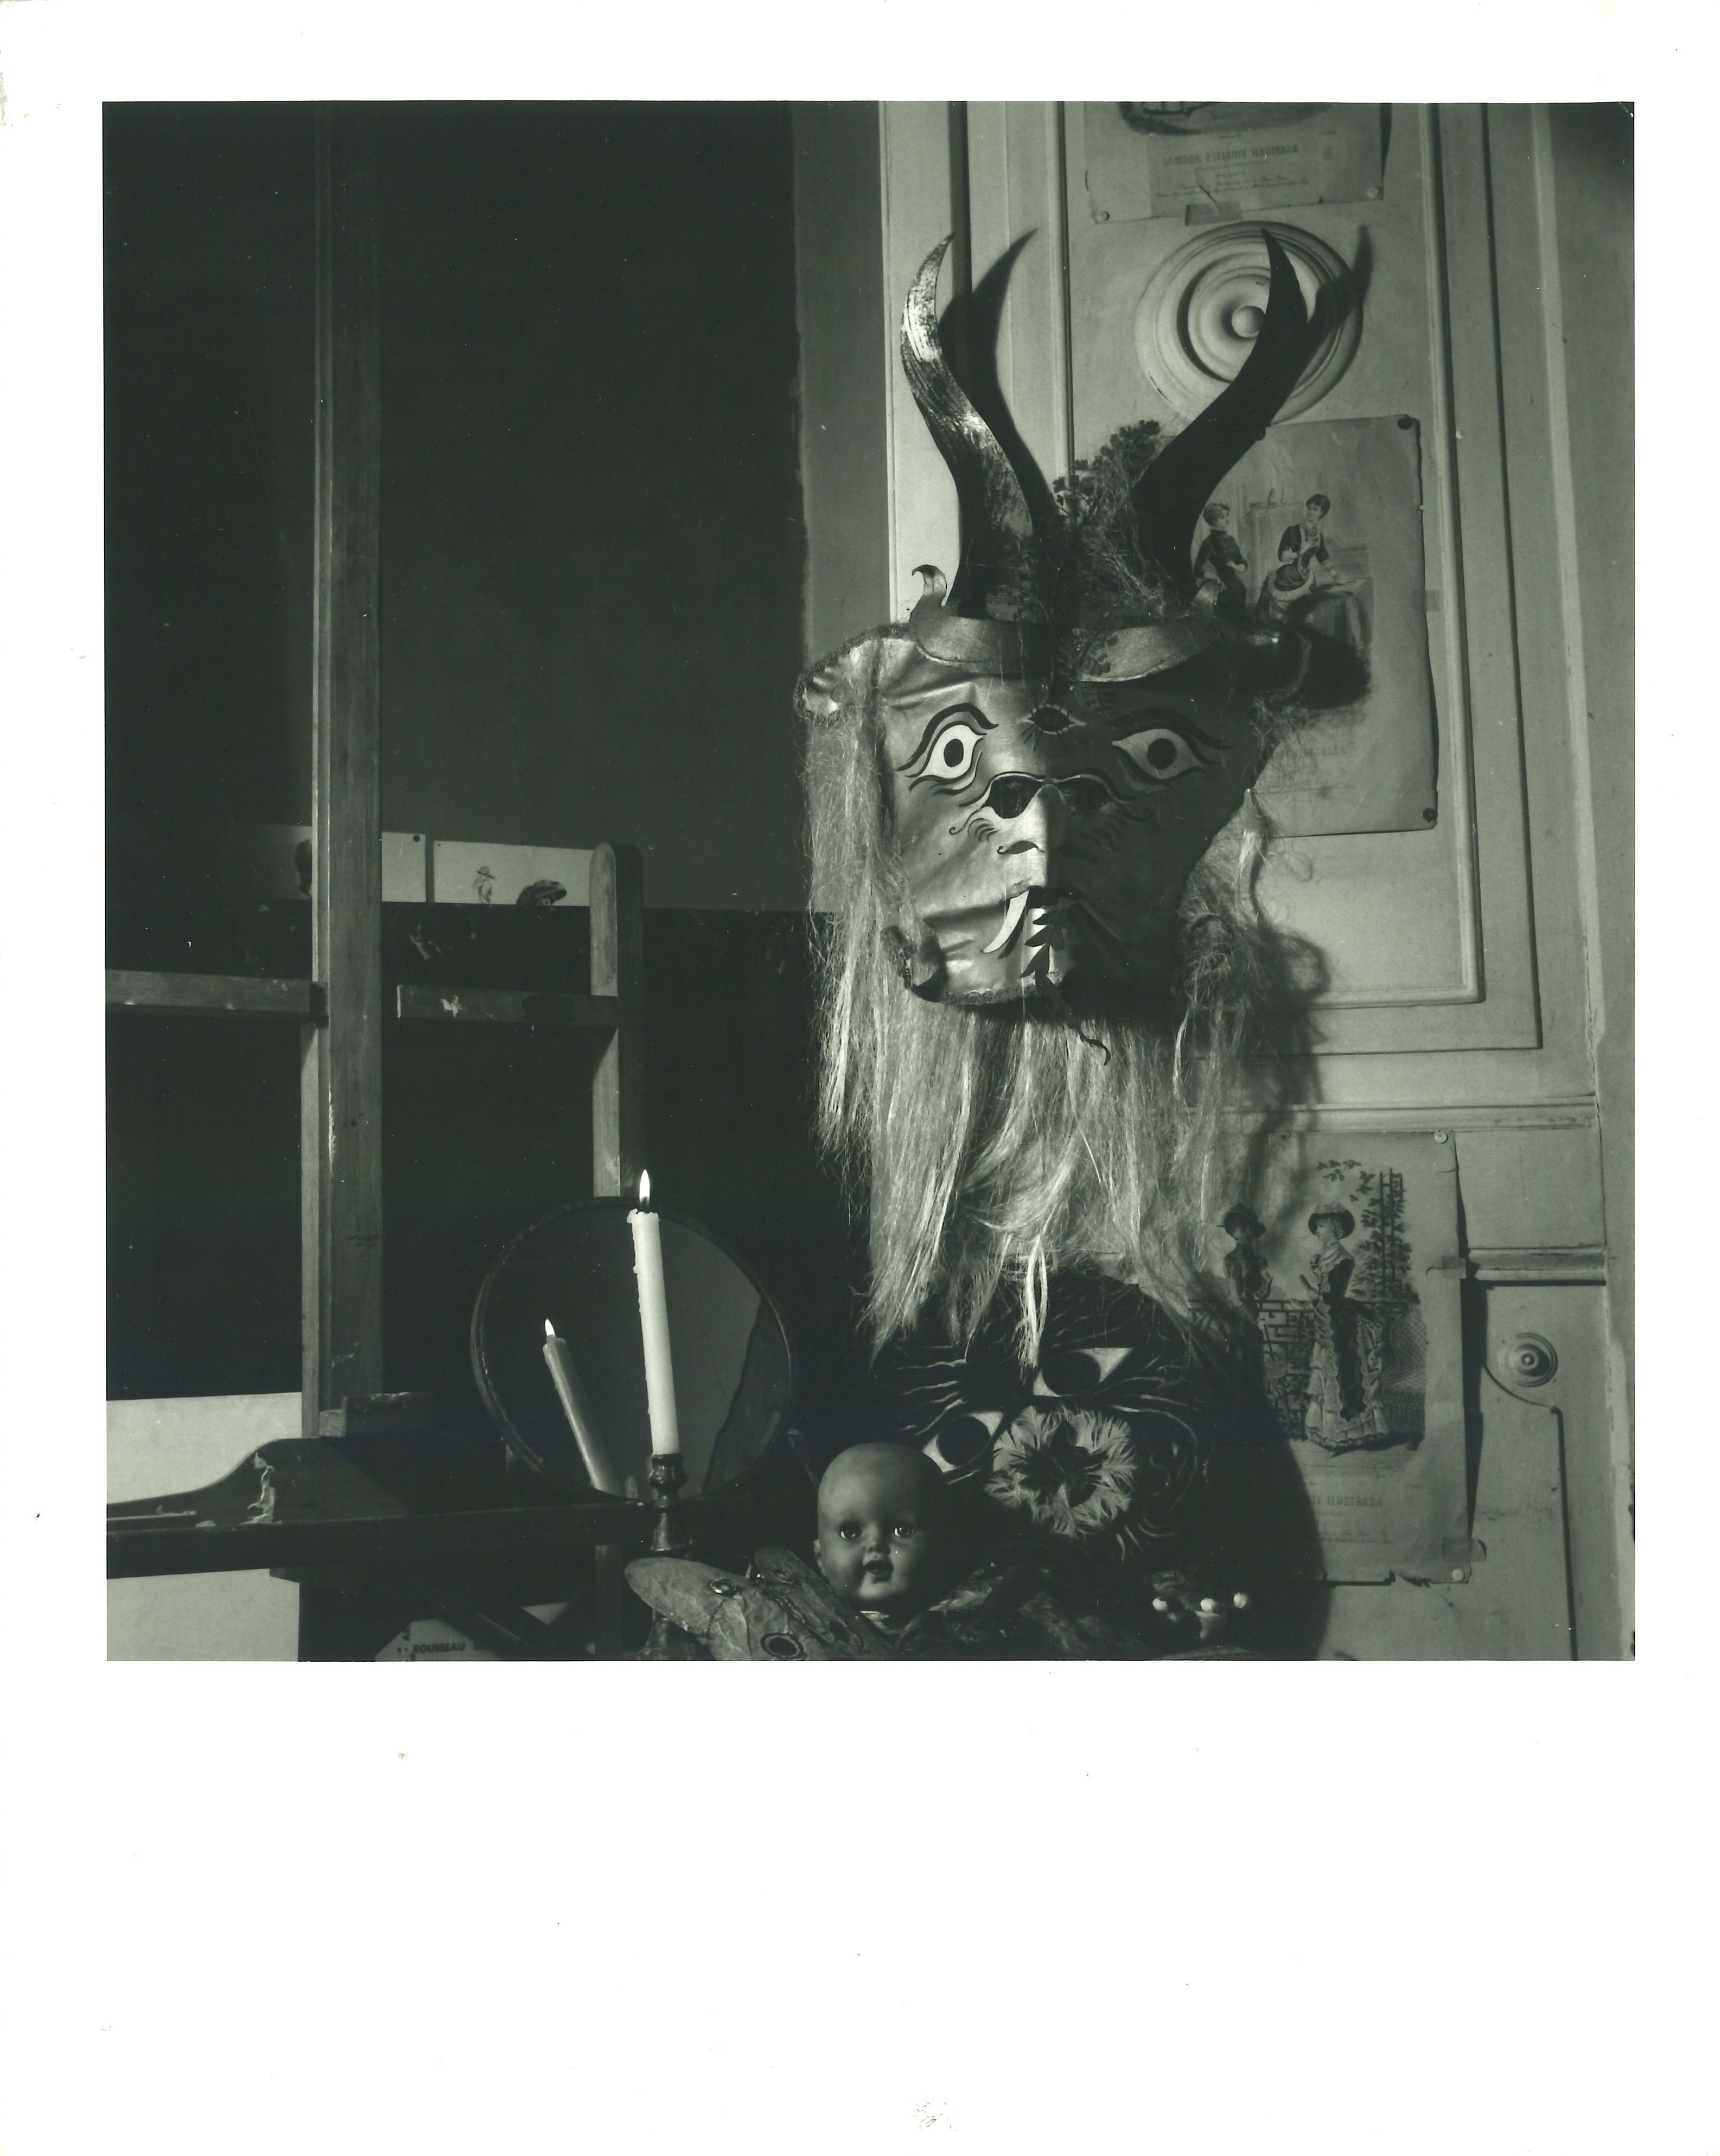 Kati Horna, Mascara de la serie Mujer y Mascara, 1962, stampa alla gelatina ai sali d’argento su carta, 8,2 x 7,8 cm immagine 25,2 x 20,2 carta. © 2005 Ana María Norah Horna y Fernández